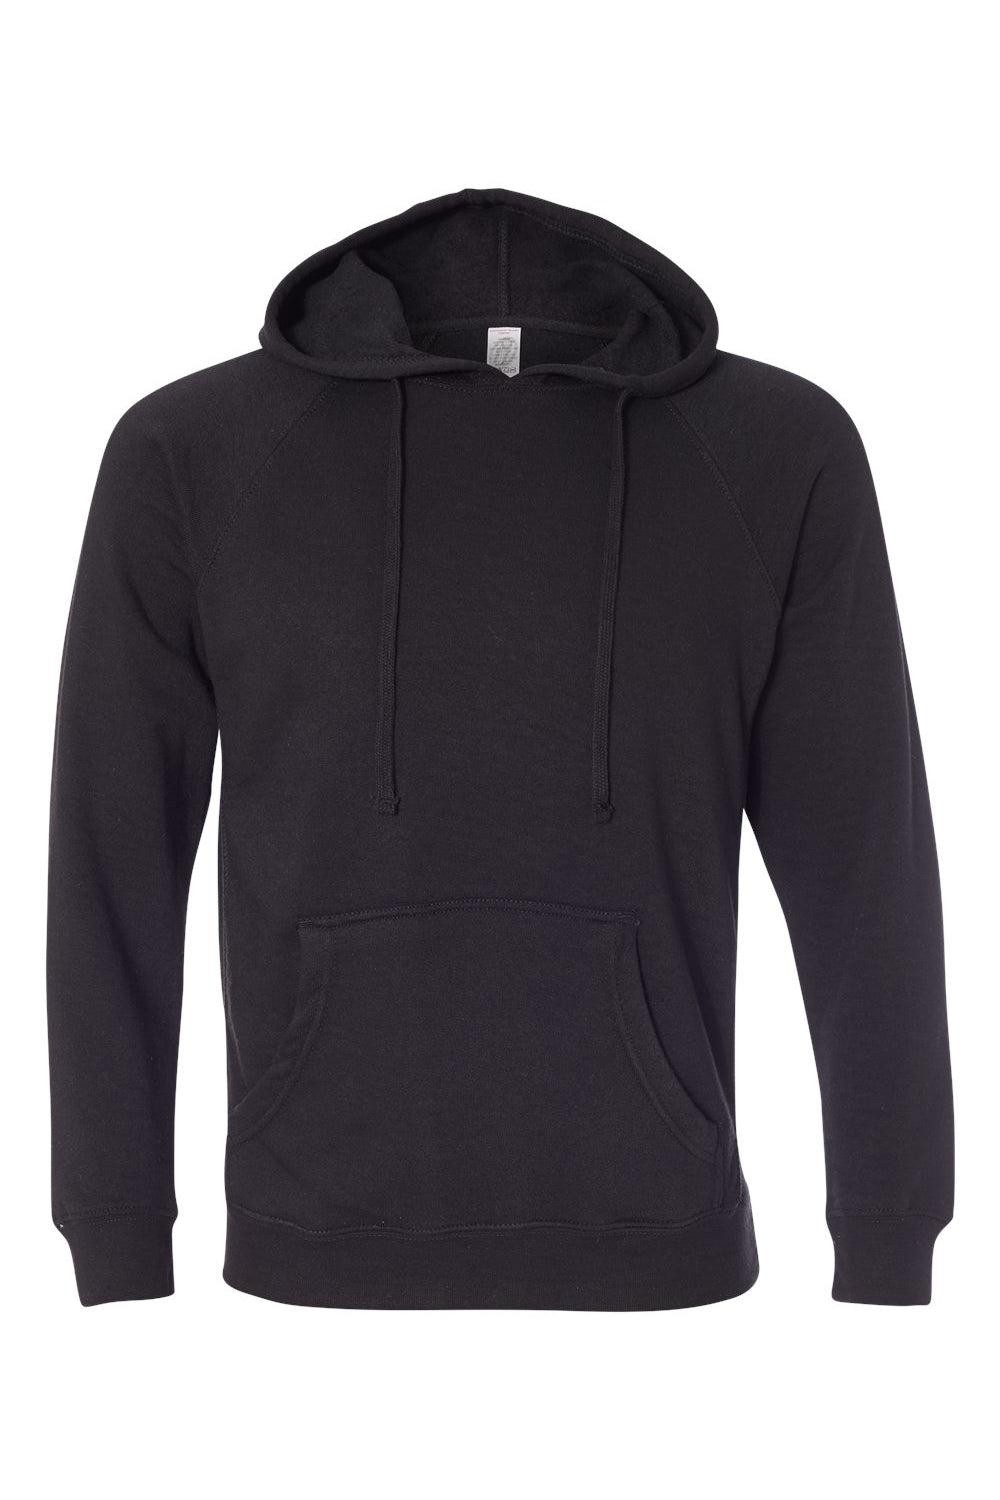 Independent Trading Co. PRM33SBP Mens Special Blend Raglan Hooded Sweatshirt Hoodie Black Flat Front